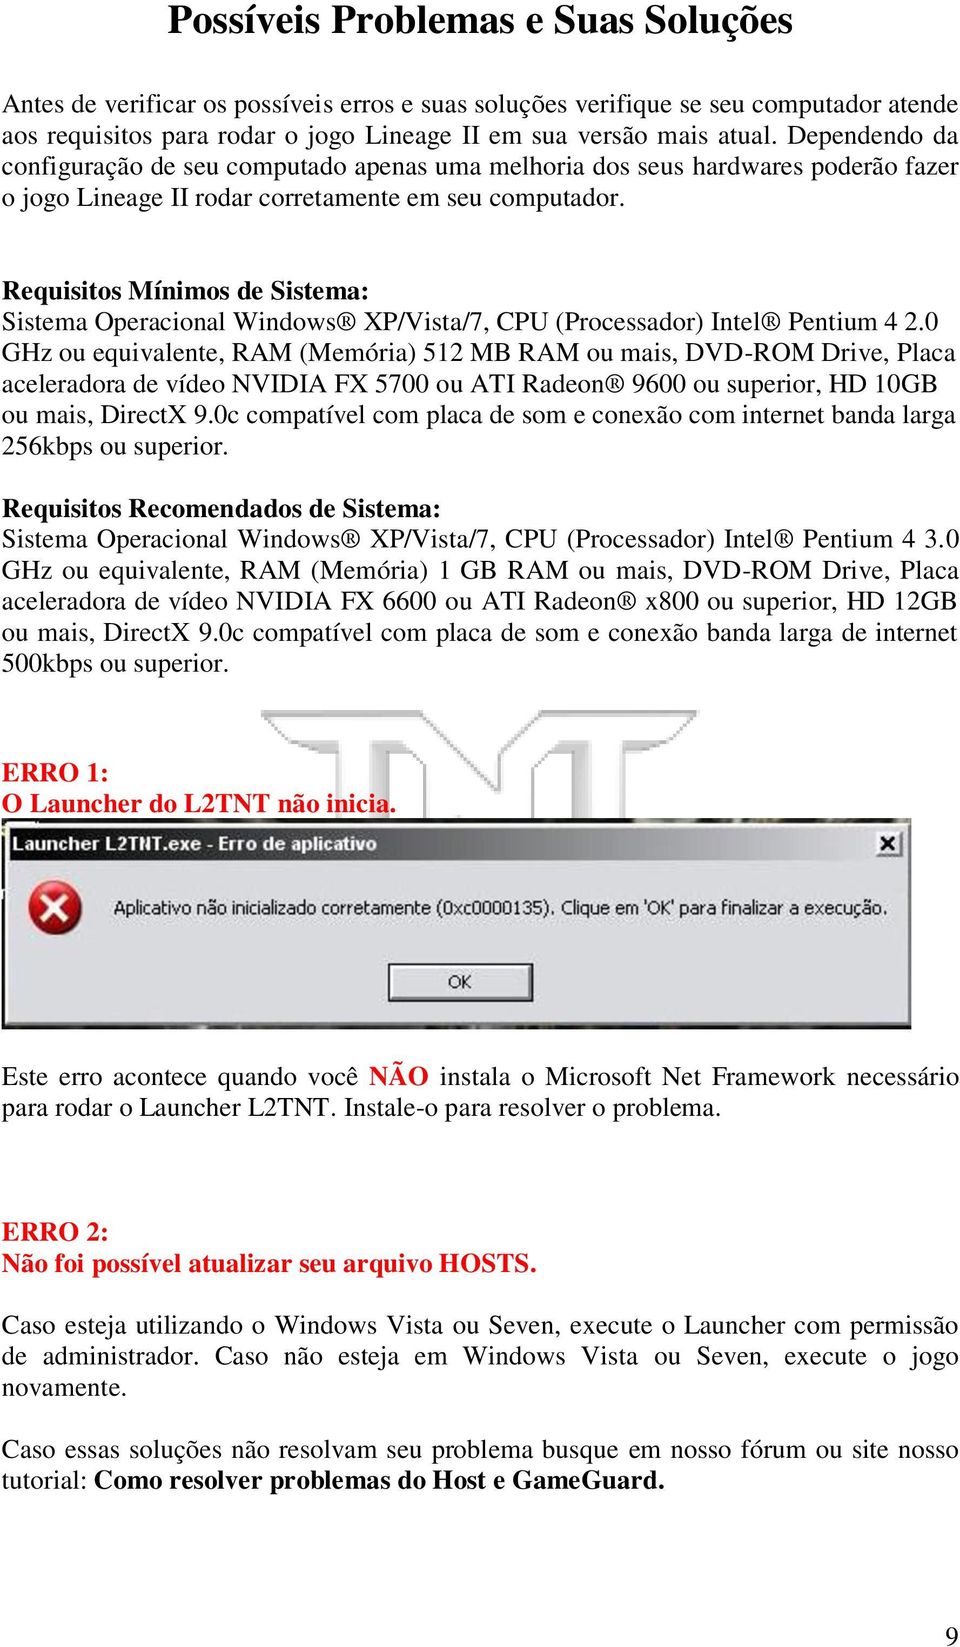 Requisitos Mínimos de Sistema: Sistema Operacional Windows XP/Vista/7, CPU (Processador) Intel Pentium 4 2.